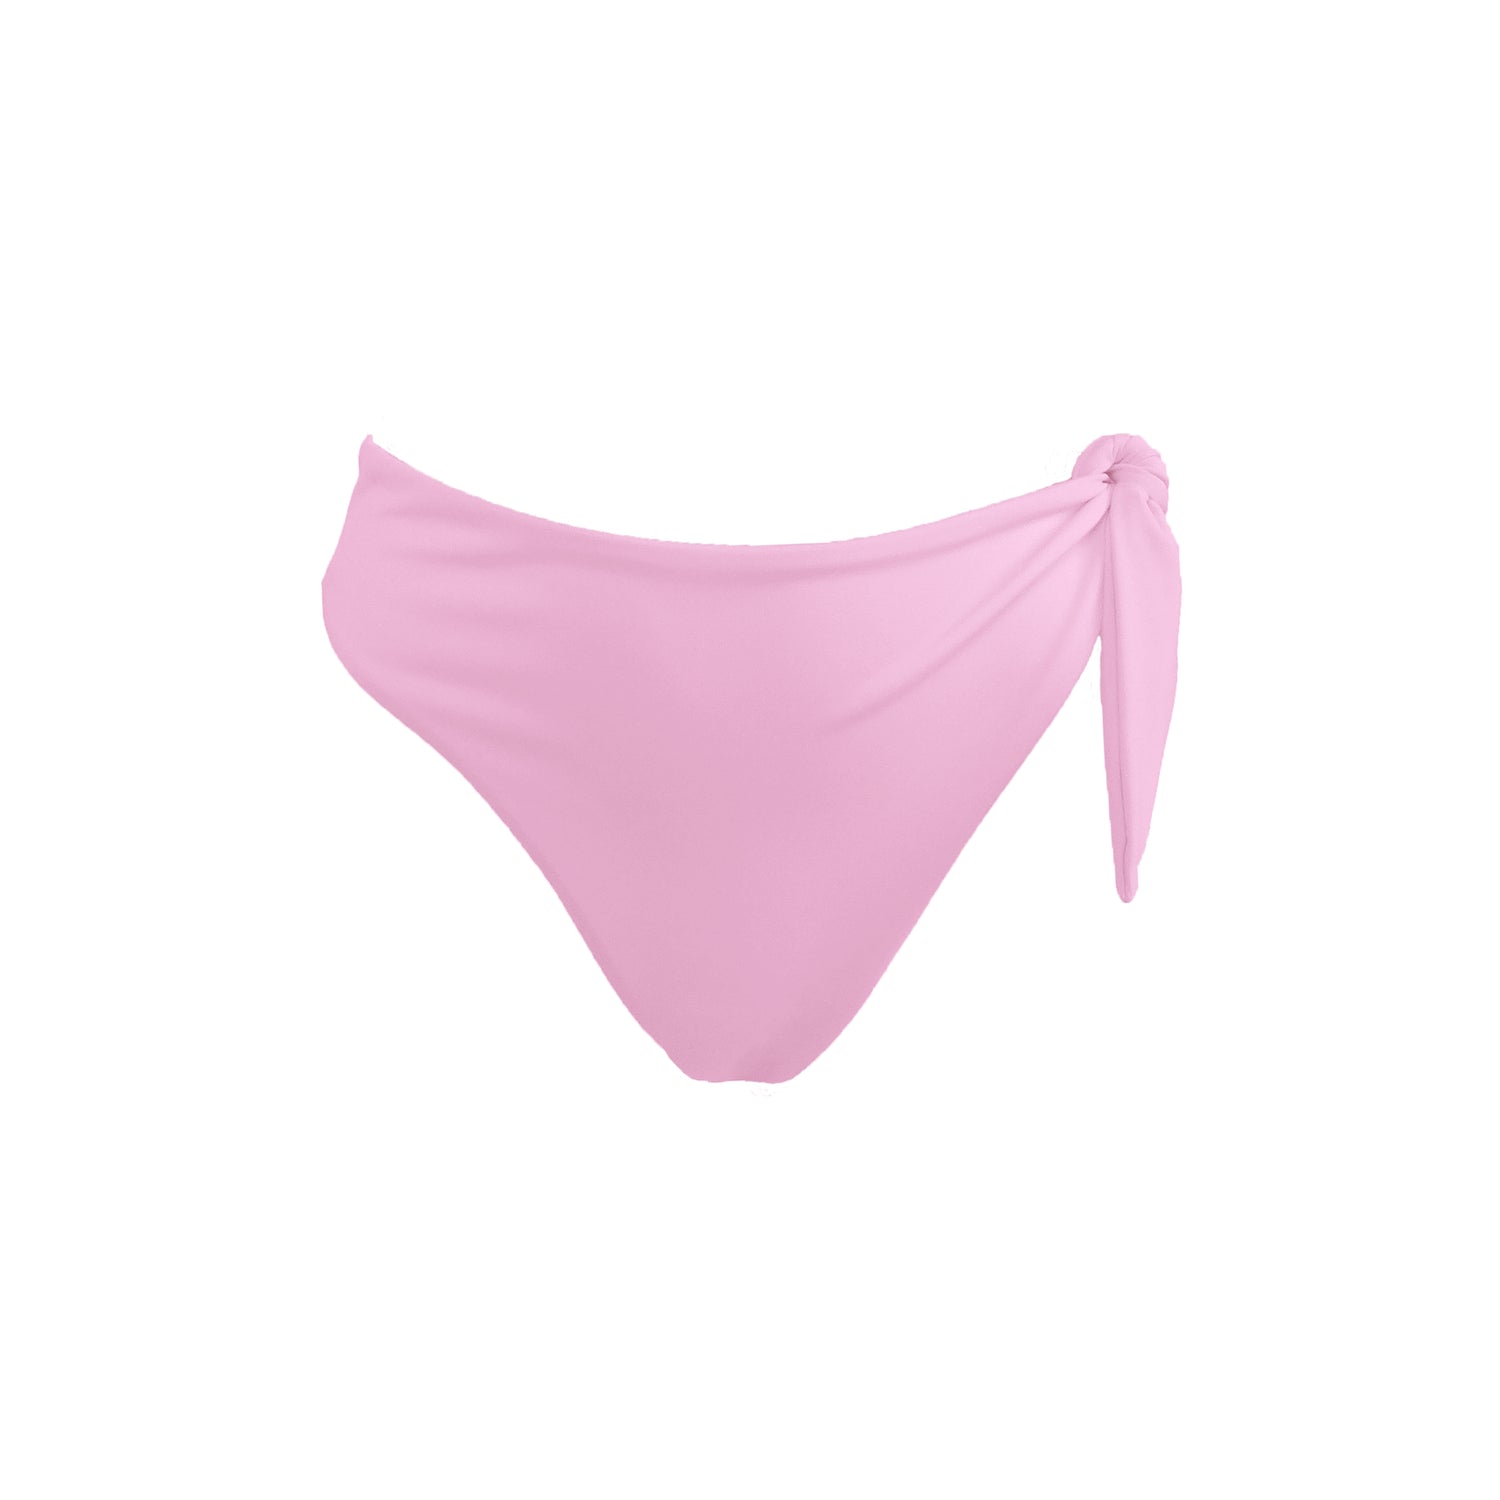 Pastel Pink Capri bikini bottom with asymmetric adjustable side tie and cheeky bum coverage.